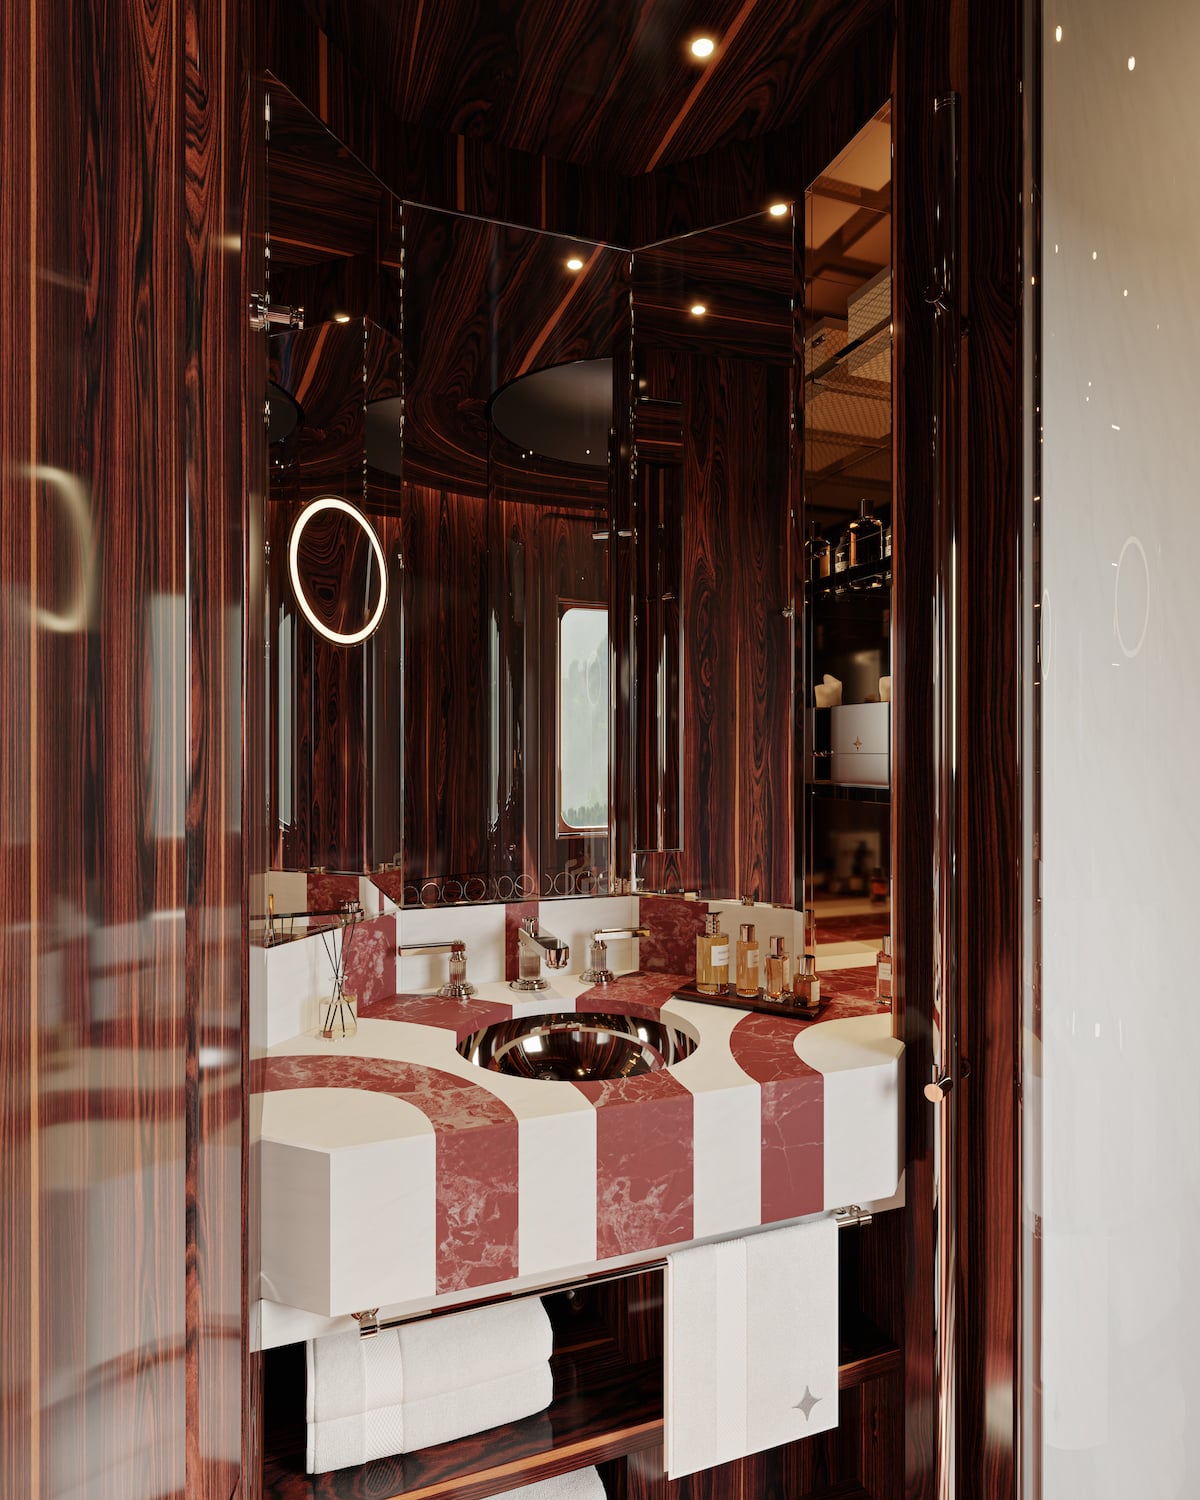 Orient Express Revelation travels to Design Miami/